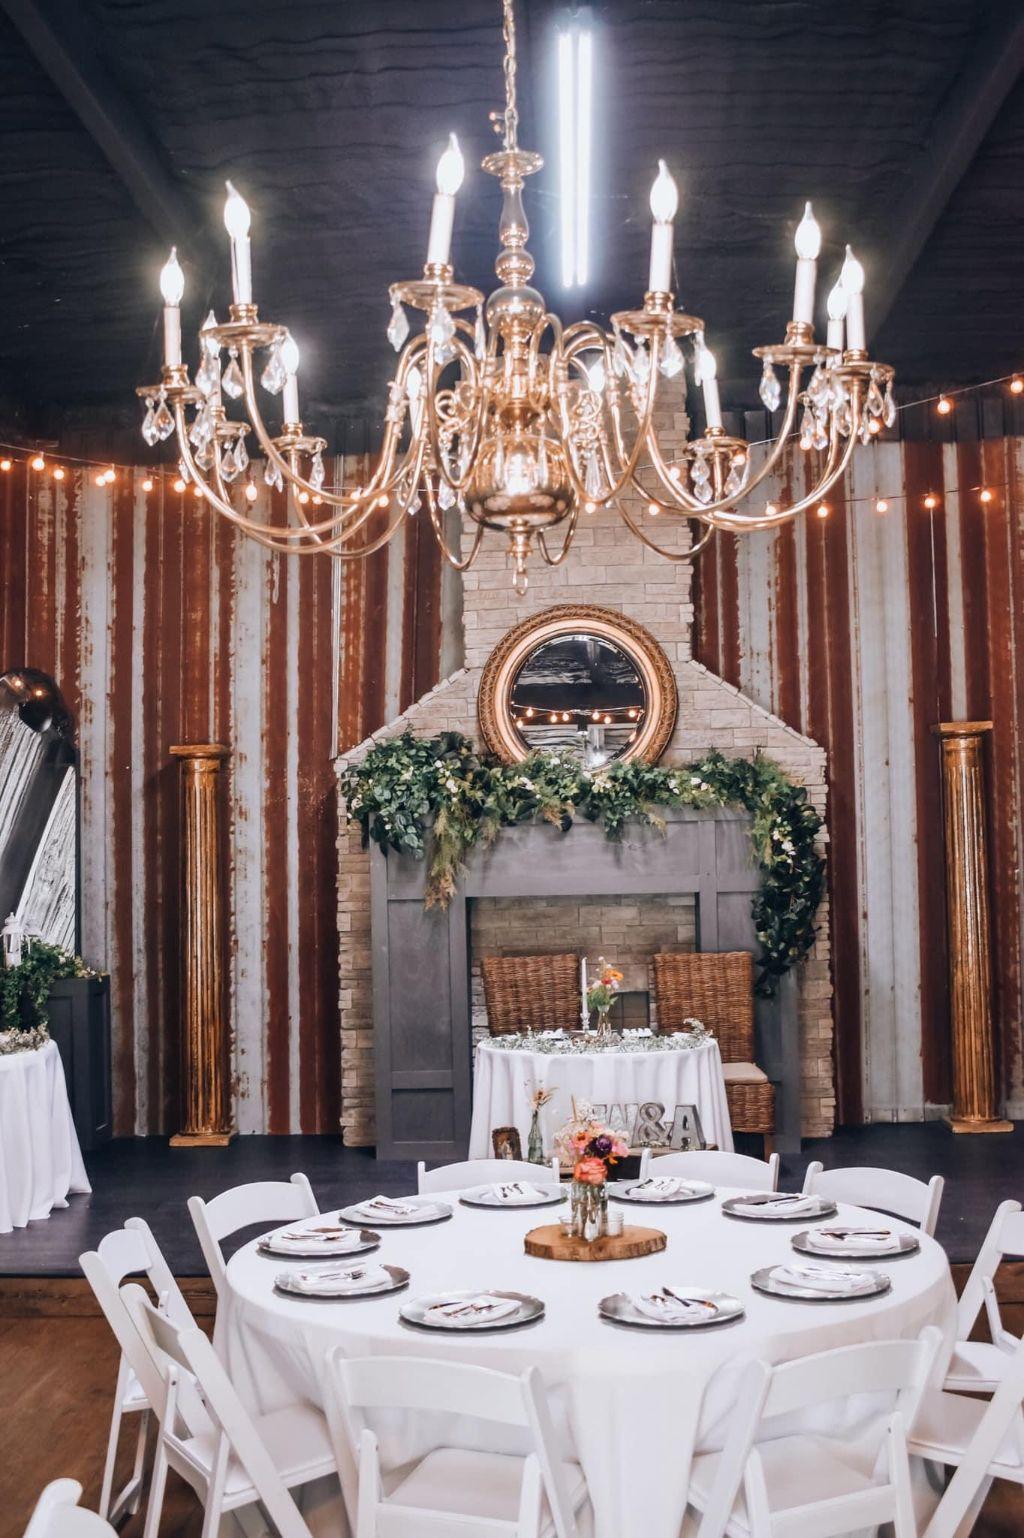 Burks Wedding - Indoor reception seating in event space